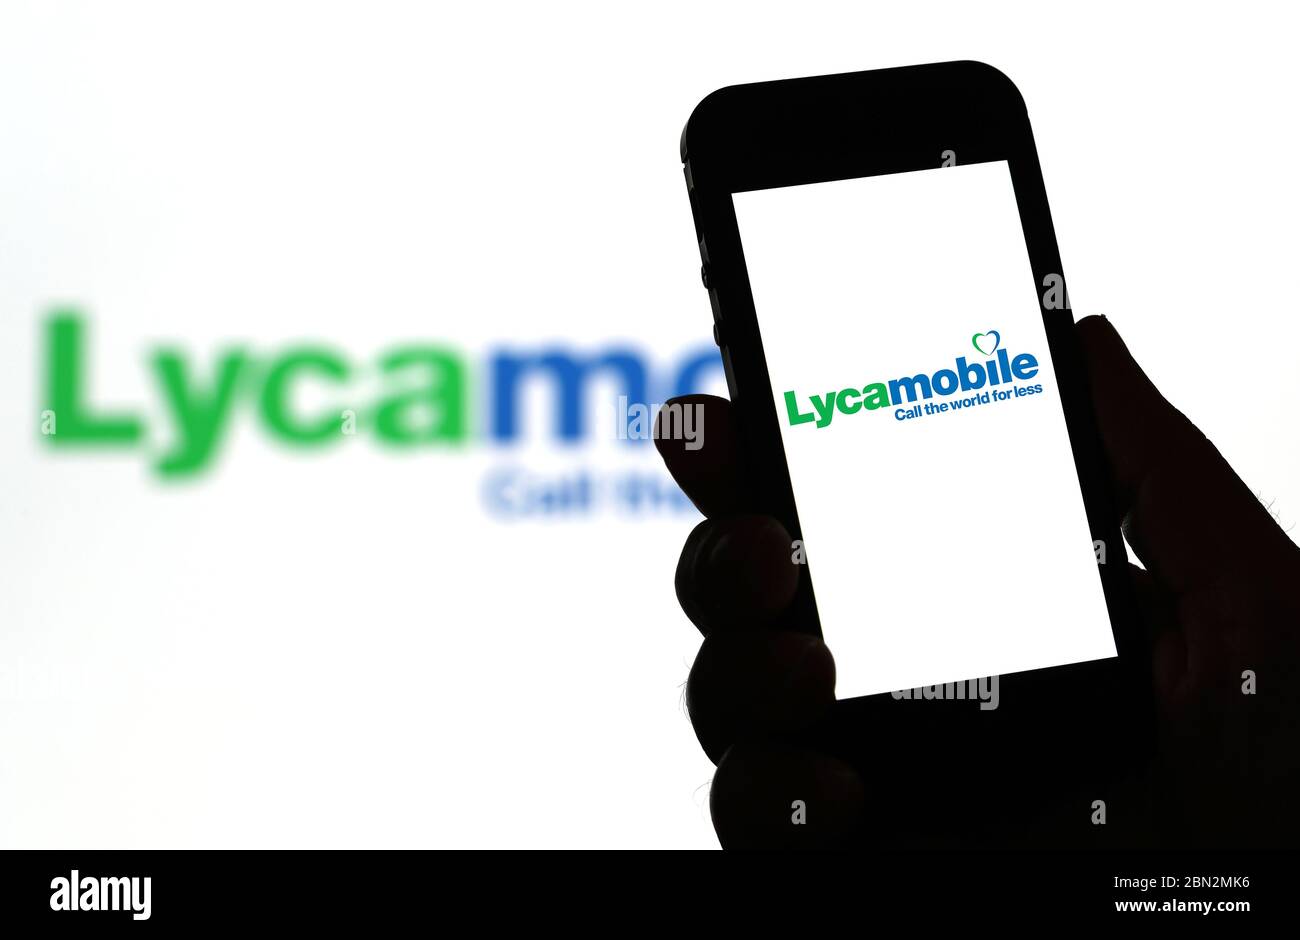 Lyca Mobile Authorized Dealear - LycaMobile, Prepaid Sim, India